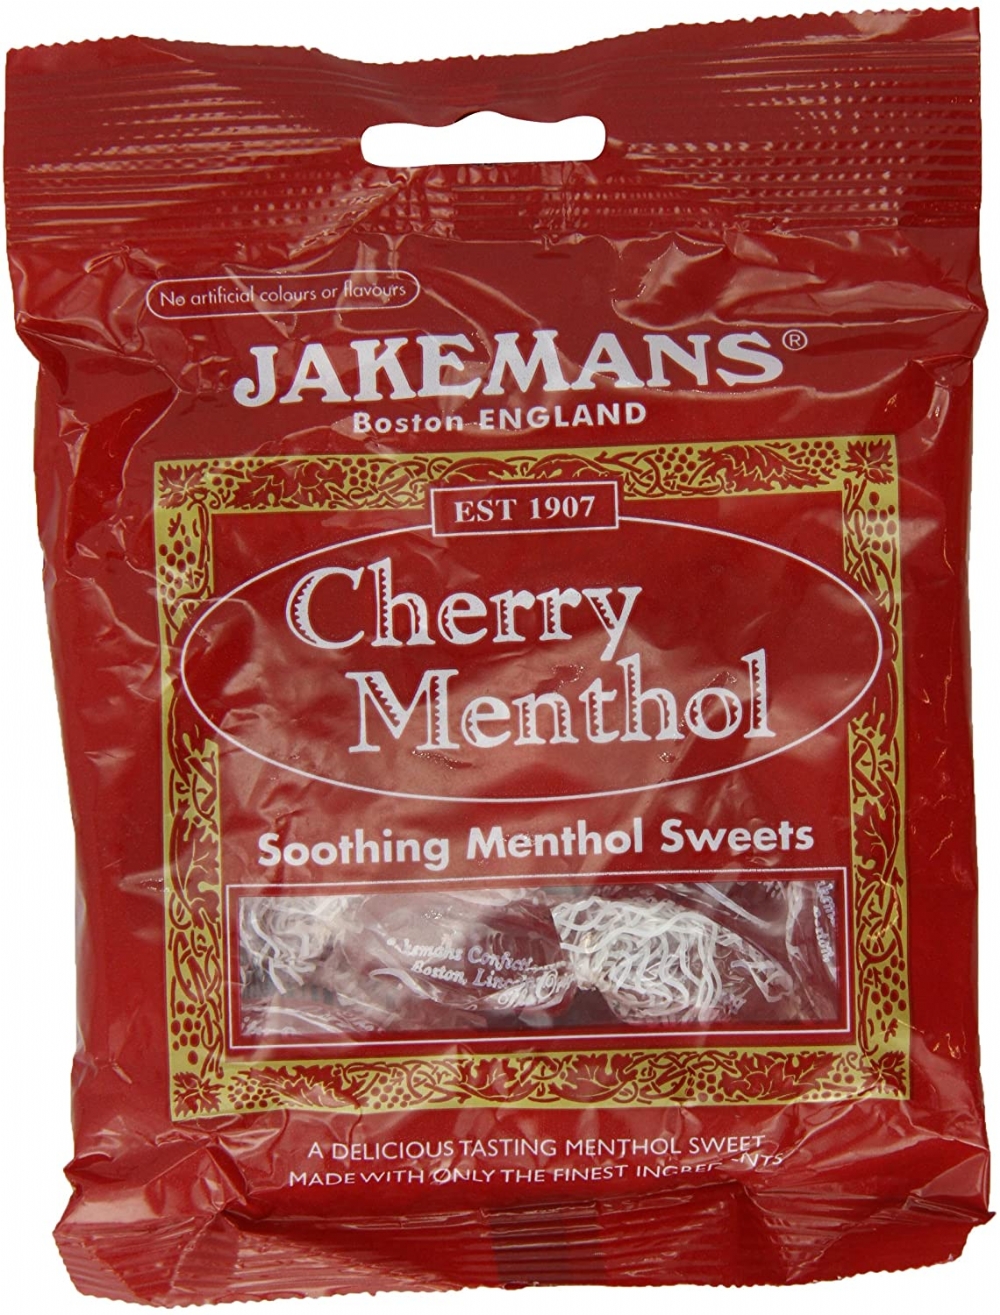 JAKEMANS Cherry Menthol Sweets 100g